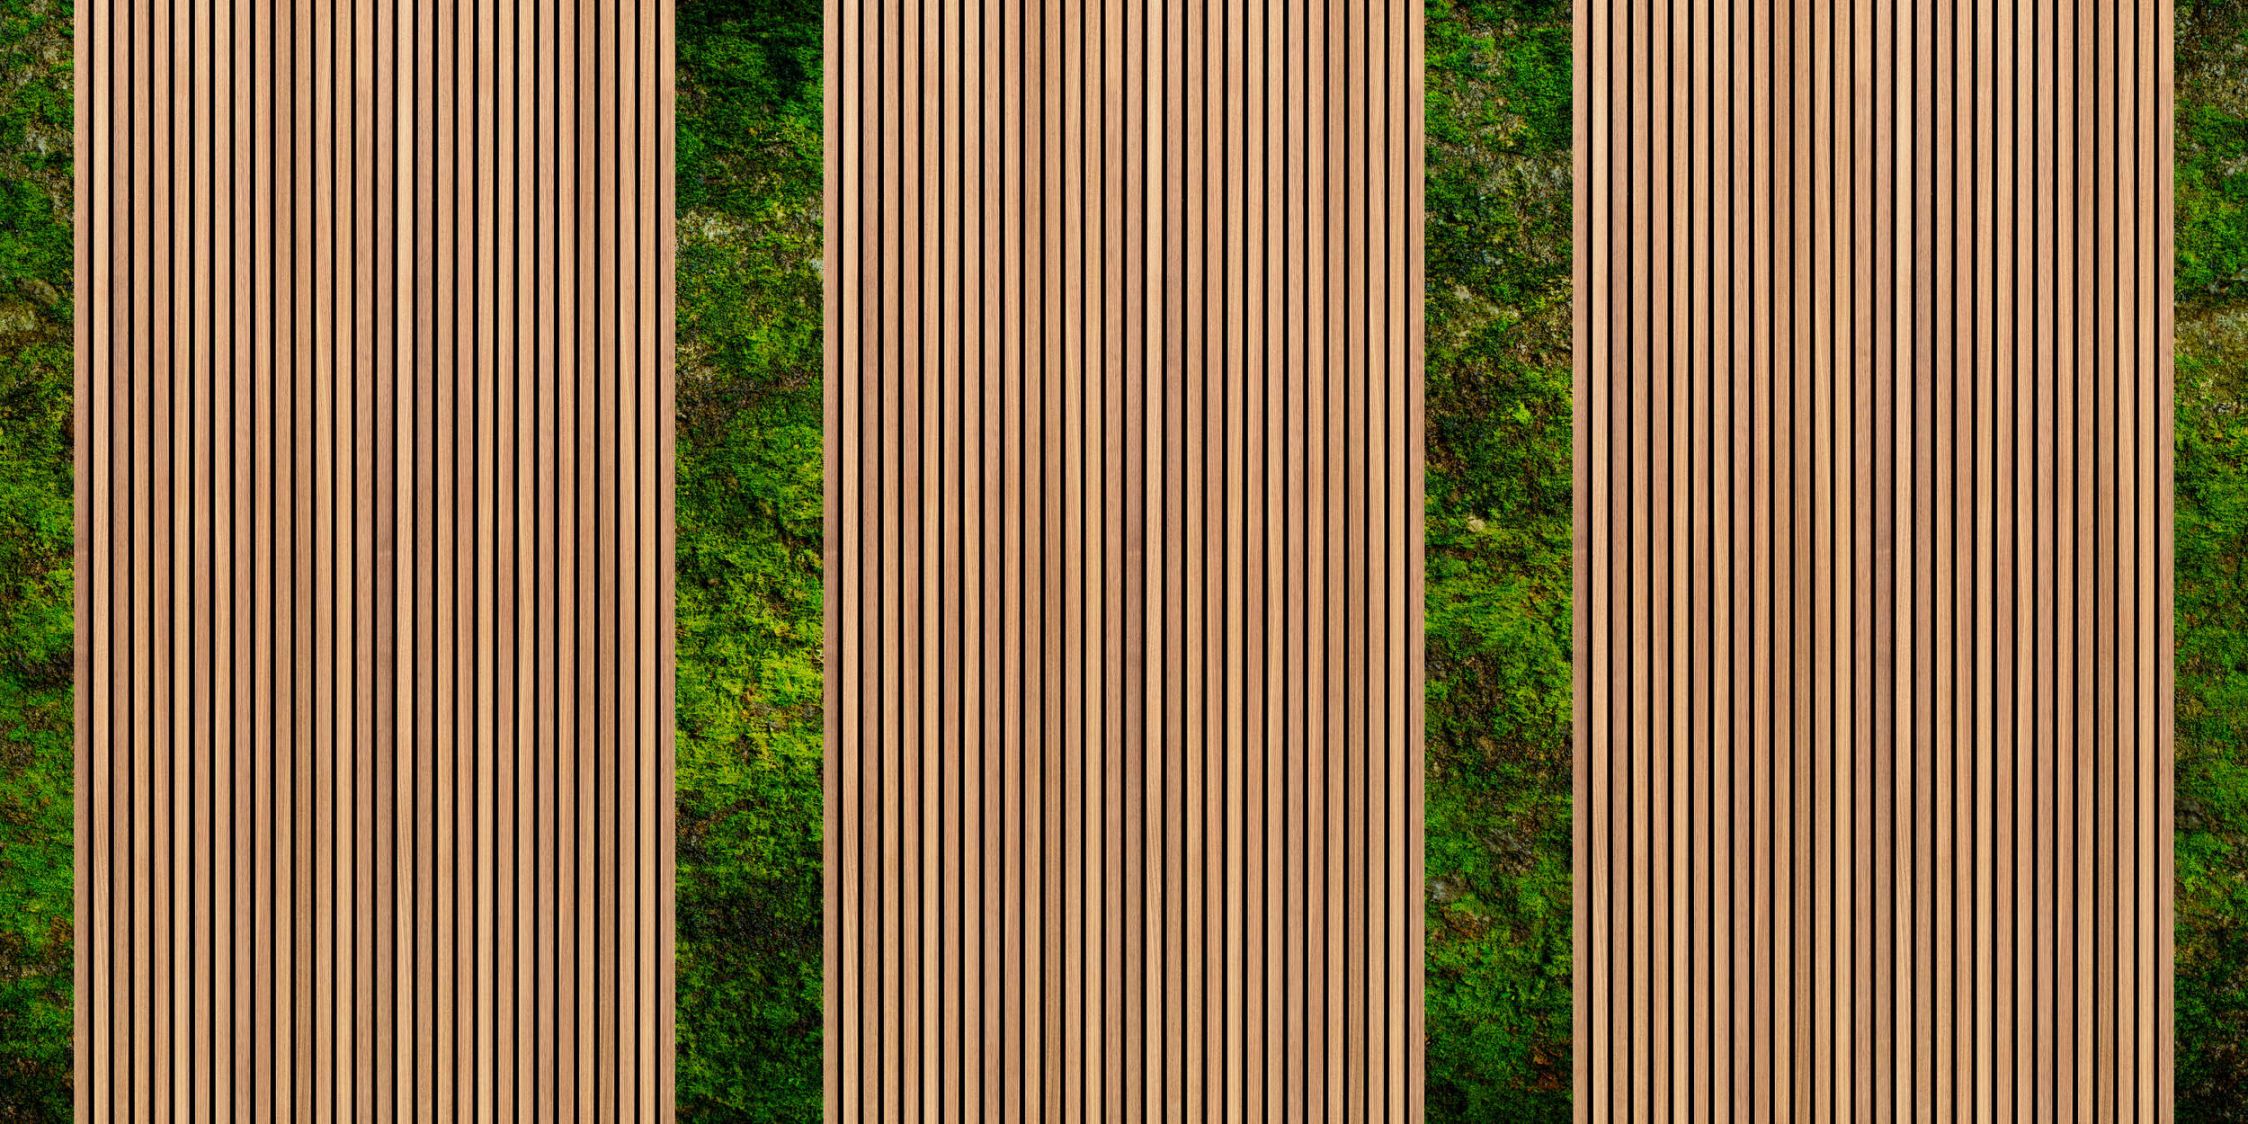             Fotomural »panel 2« - Paneles anchos de madera y musgo - Tela no tejida ligeramente texturada
        